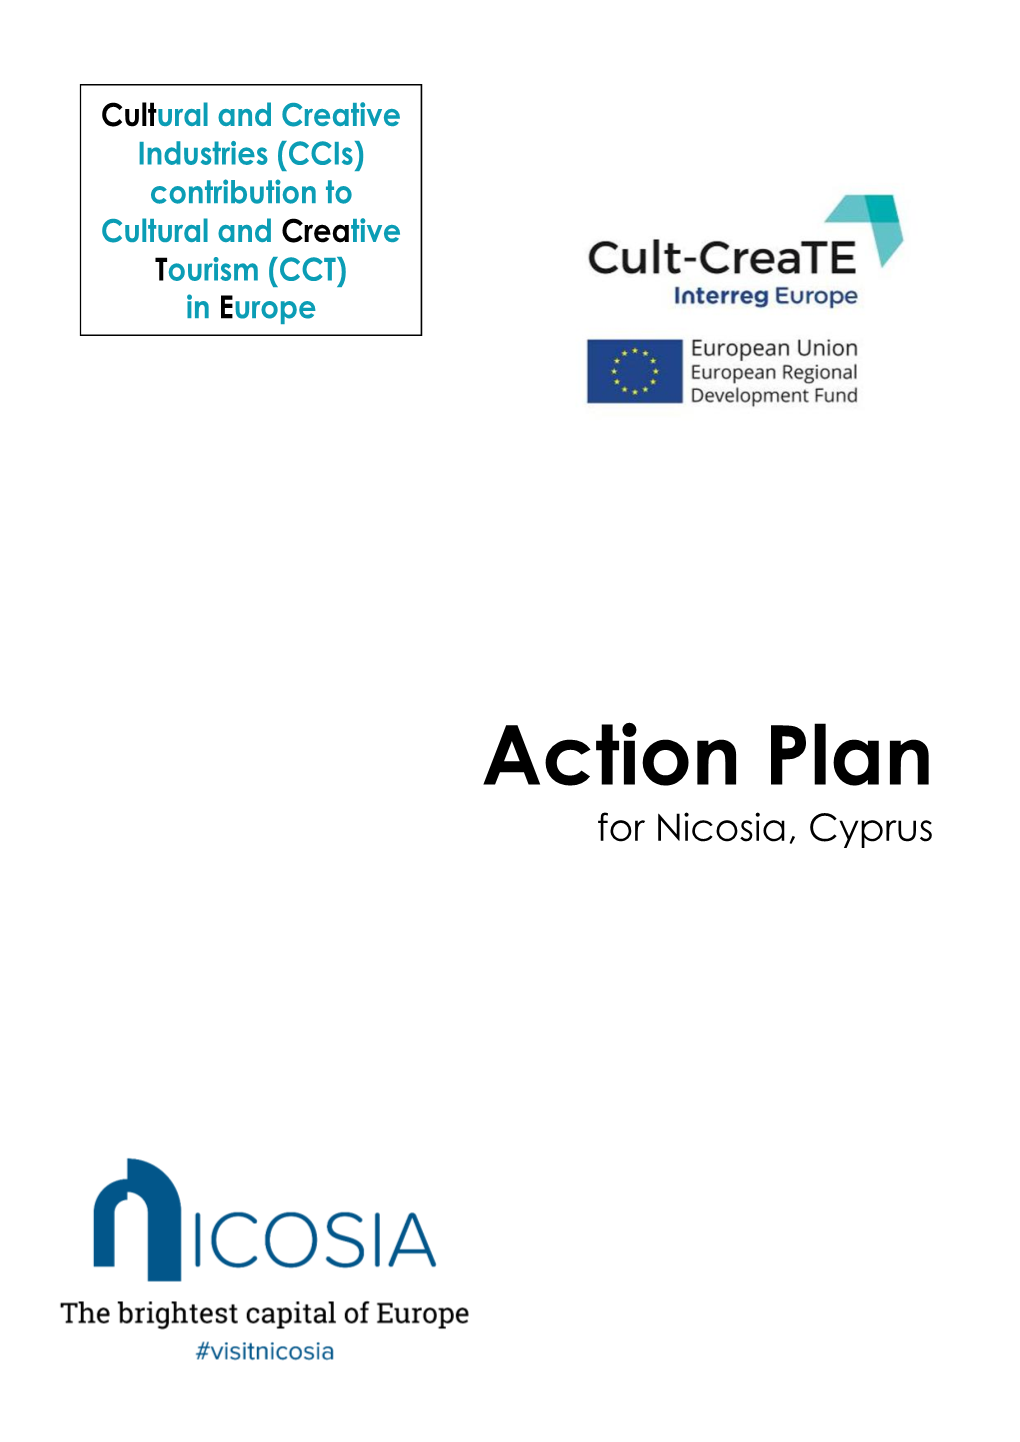 Nicosia Tourism Board Action Plan, Cyprus